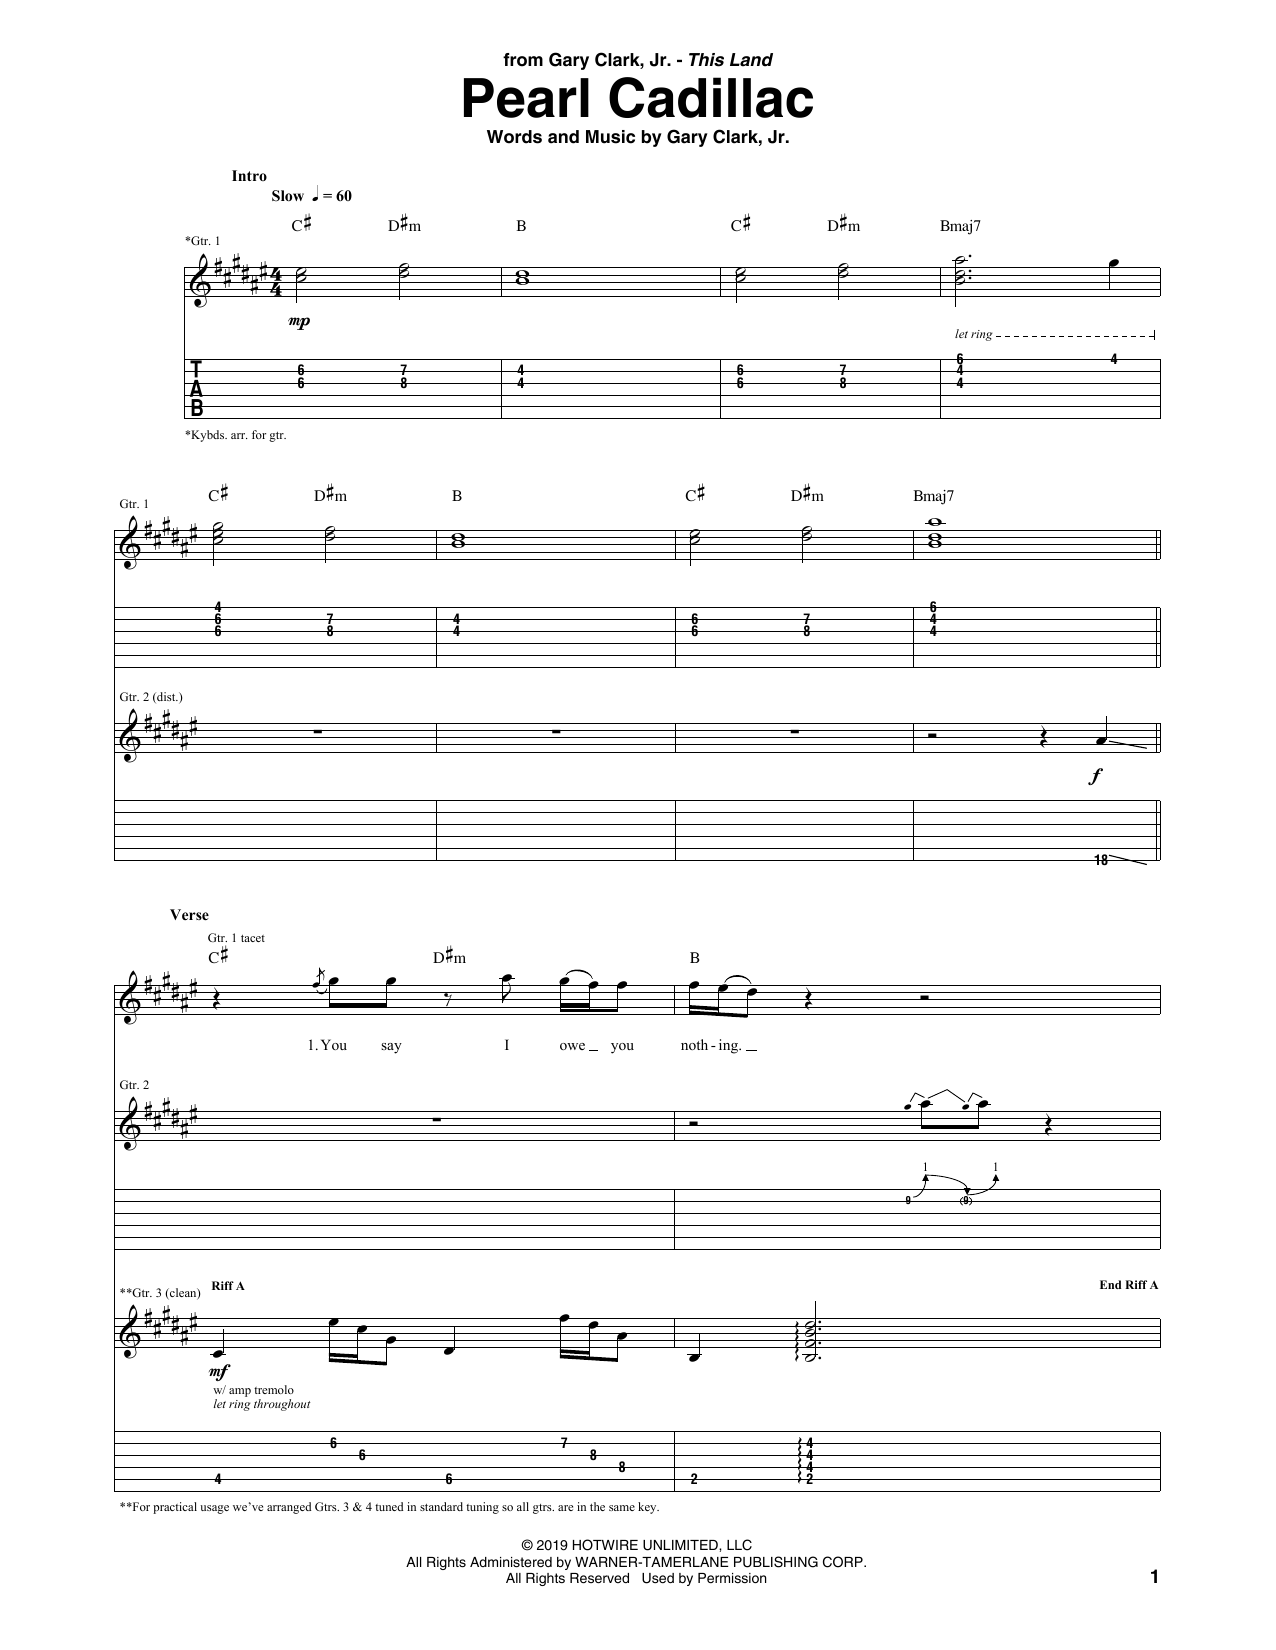 Gary Clark, Jr. Pearl Cadillac Sheet Music Notes & Chords for Guitar Tab - Download or Print PDF